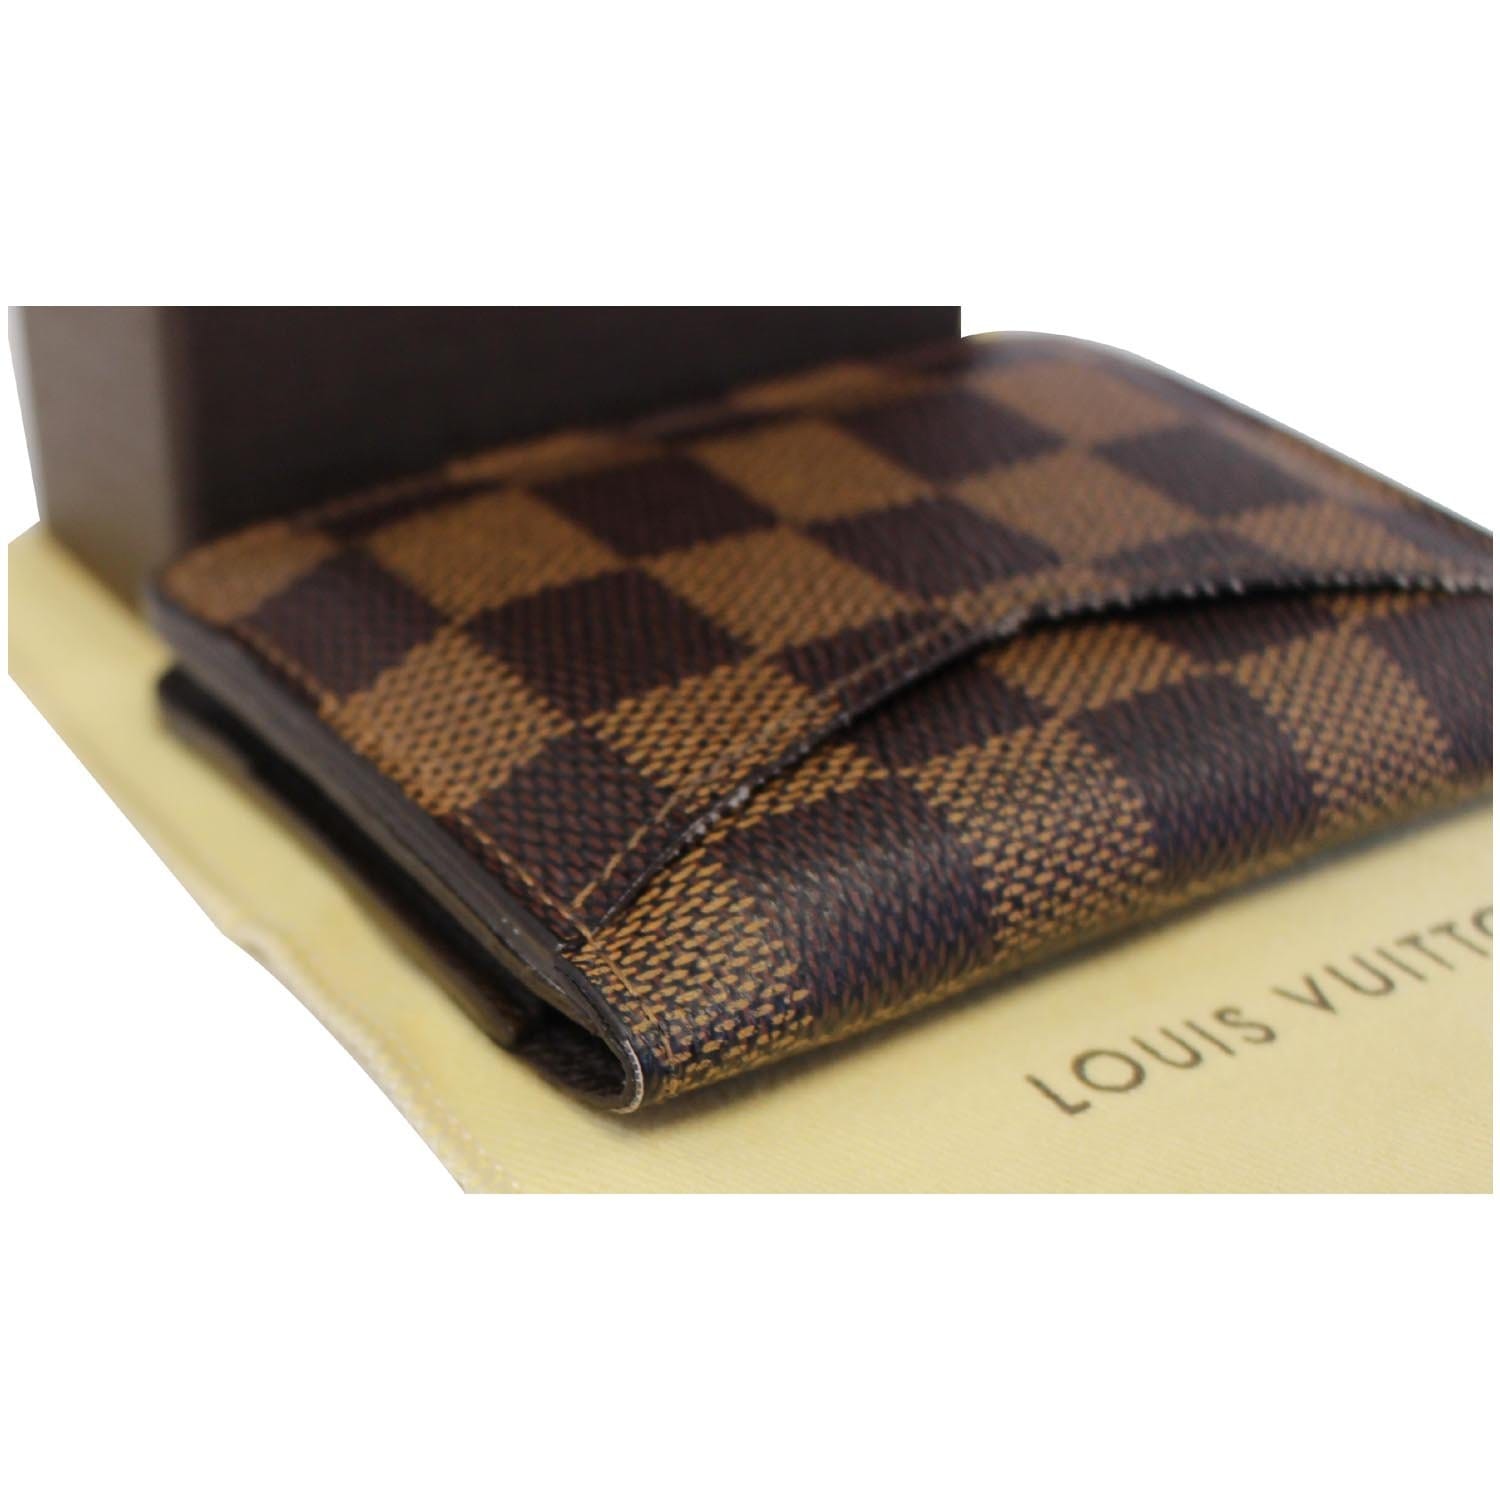 💫Louis Vuitton Galaxy Pocket Organizer💫